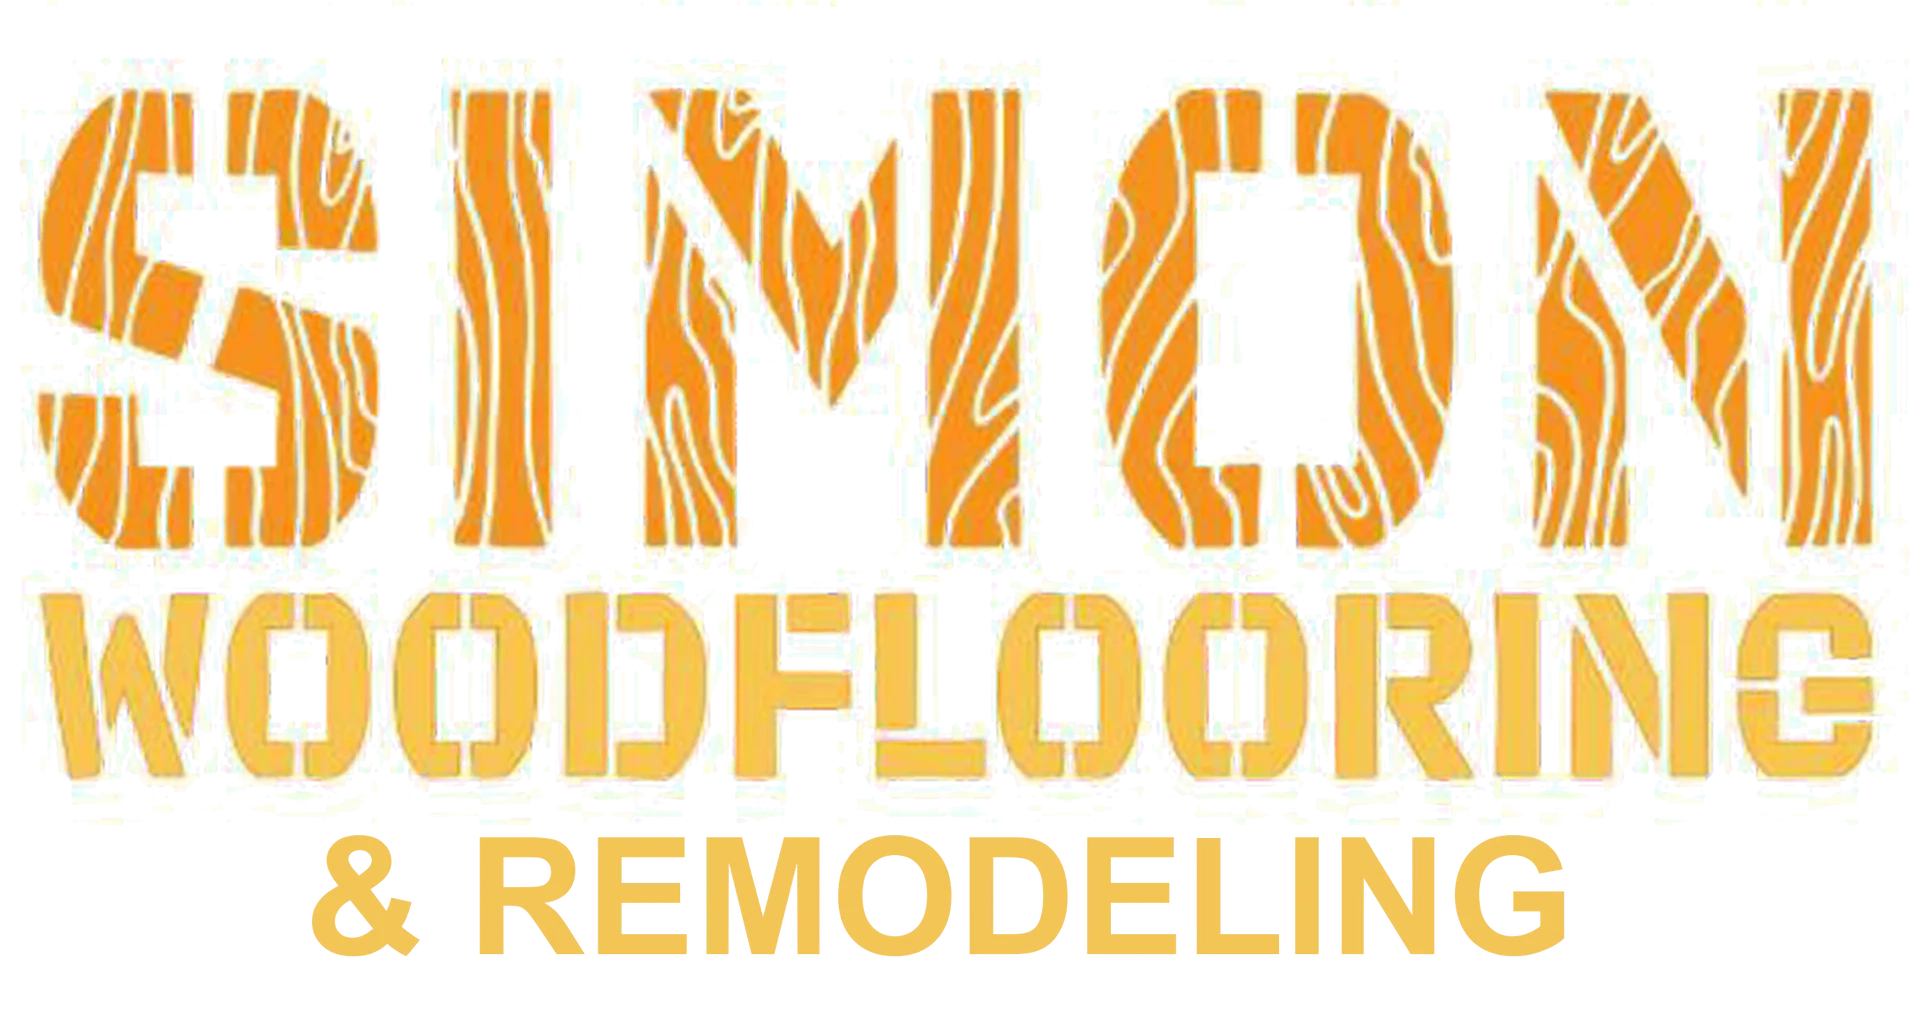 Simon Wood Flooring & Remodeling Logo